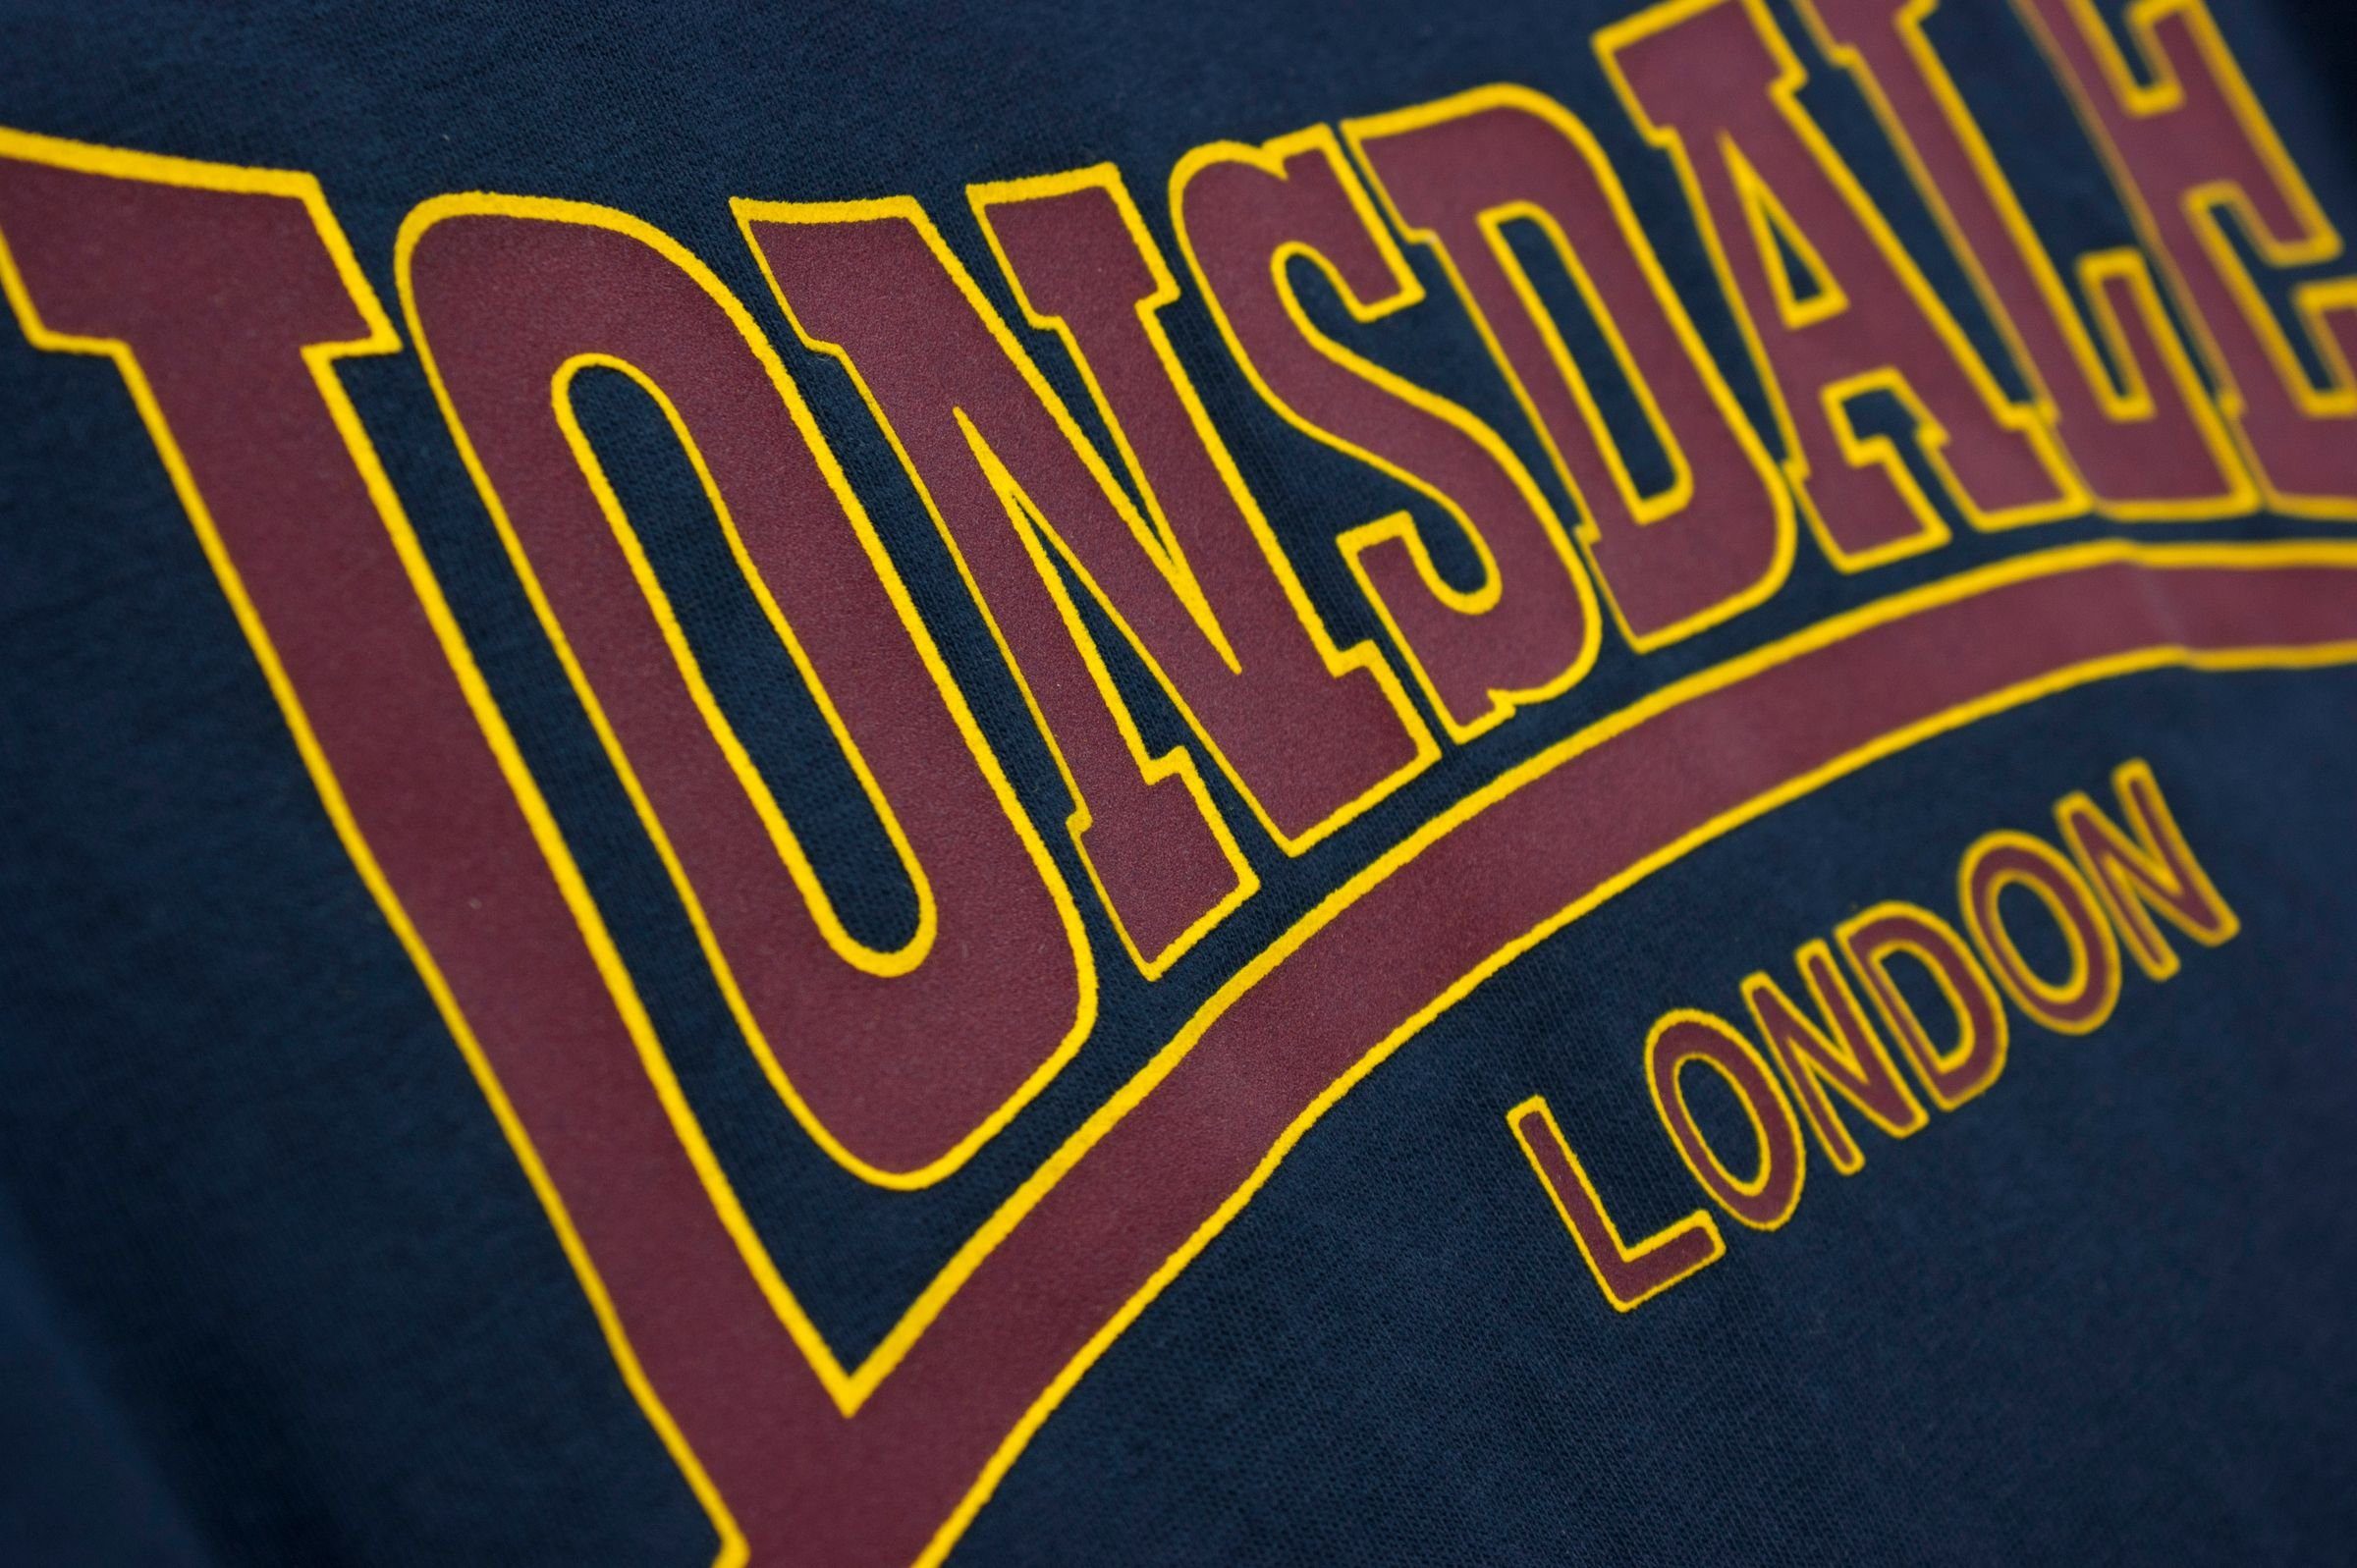 Lonsdale T-Shirt Lonsdale Adult Classic navy Herren T-Shirt